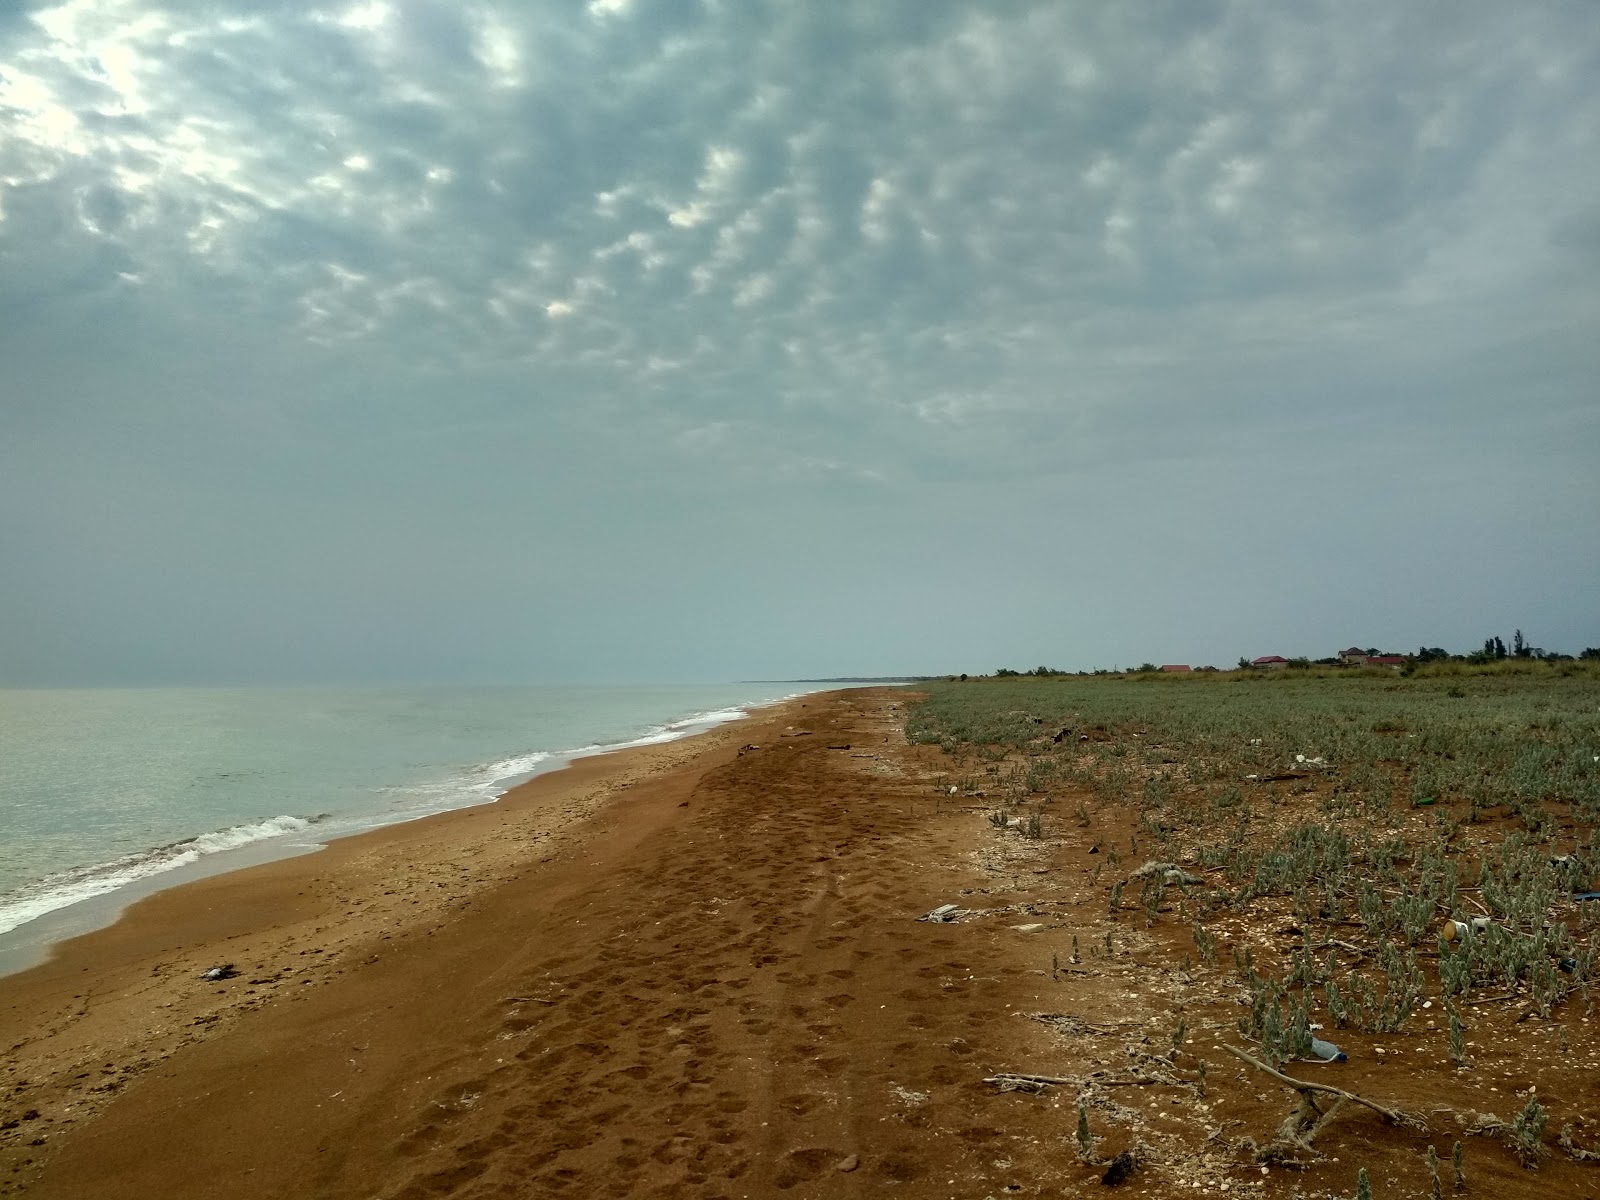 Fotografija Svjazist Beach z turkizna čista voda površino